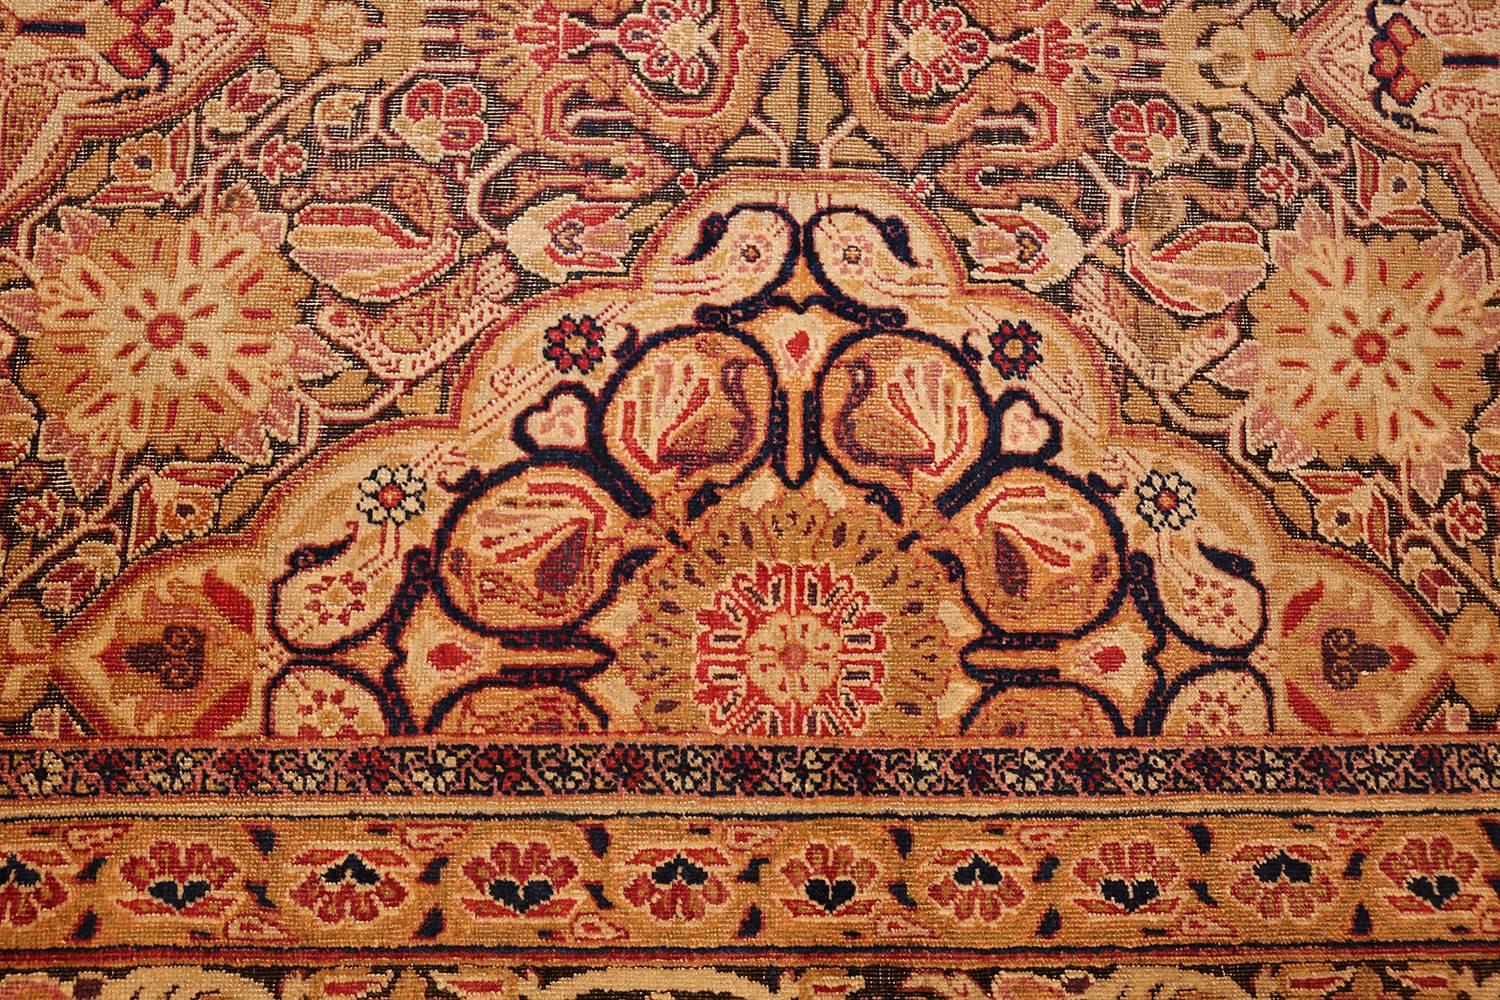 Kirman Antique Kerman Persian Rug. Size: 8 ft 9 in x 13 ft 1 in (2.67 m x 3.99 m)